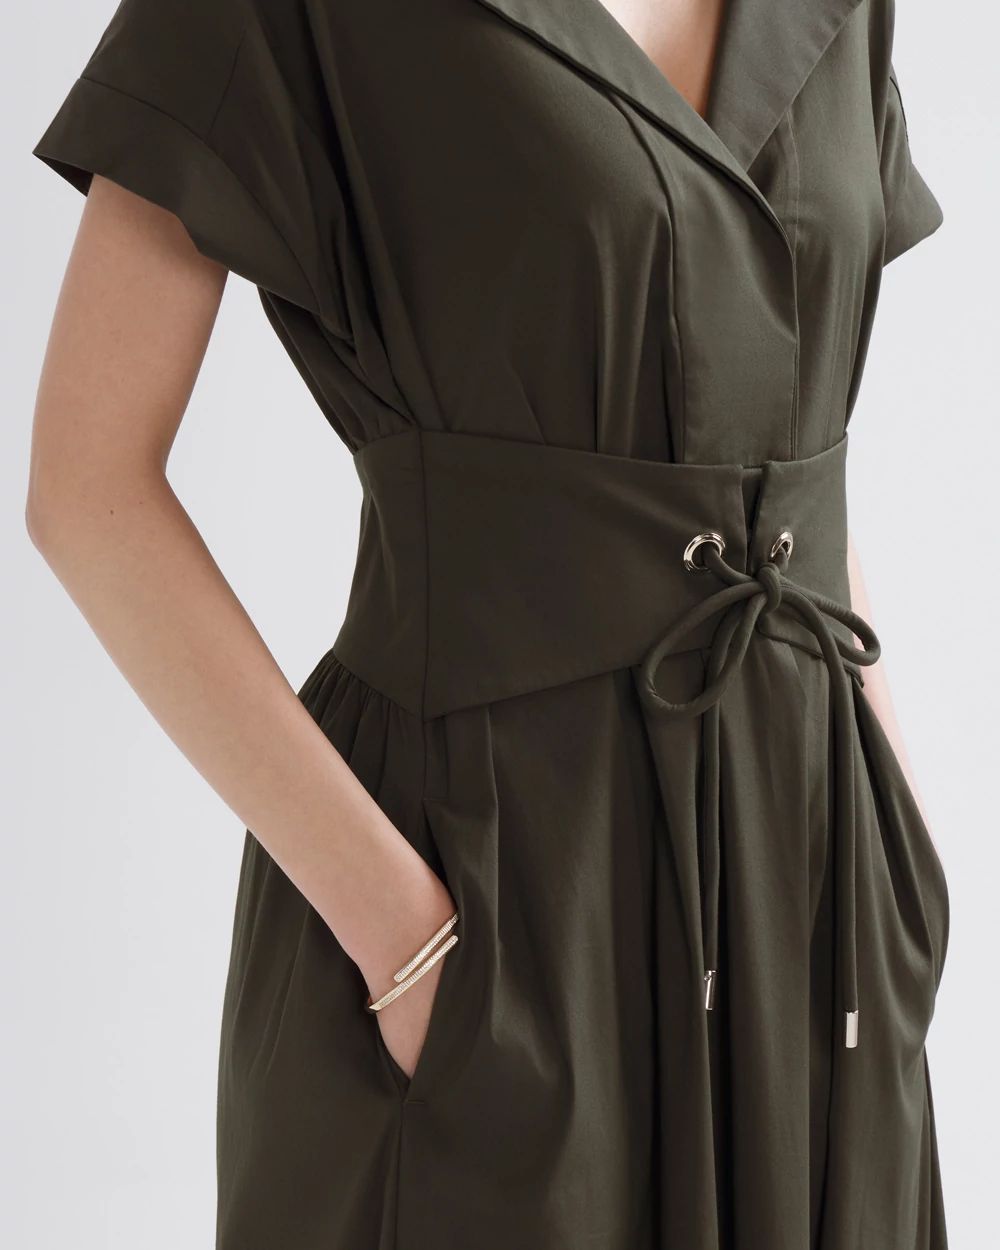 Short Sleeve Collar Poplin Midi Dress click to view larger image.